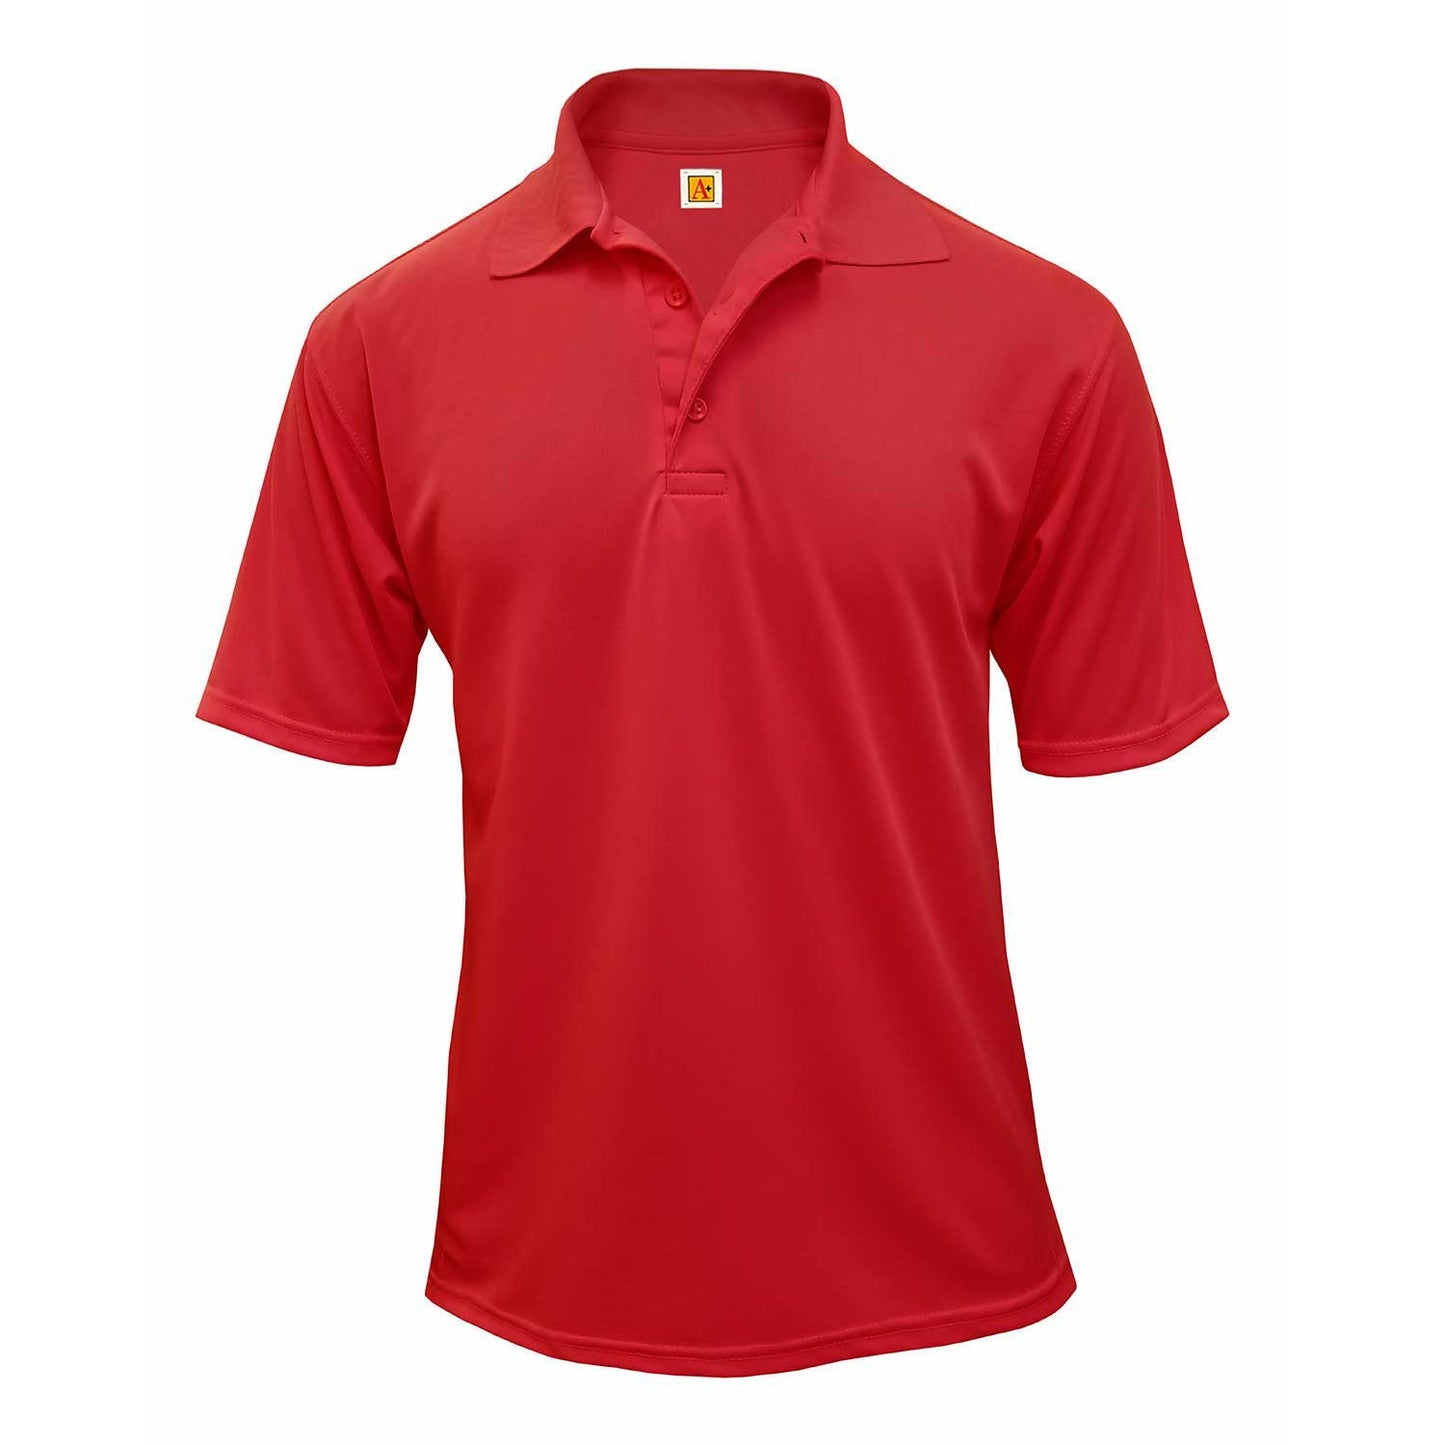 Performance Dri-fit Jersey Knit Short Sleeve Shirt (Unisex) w/Logo - 1111